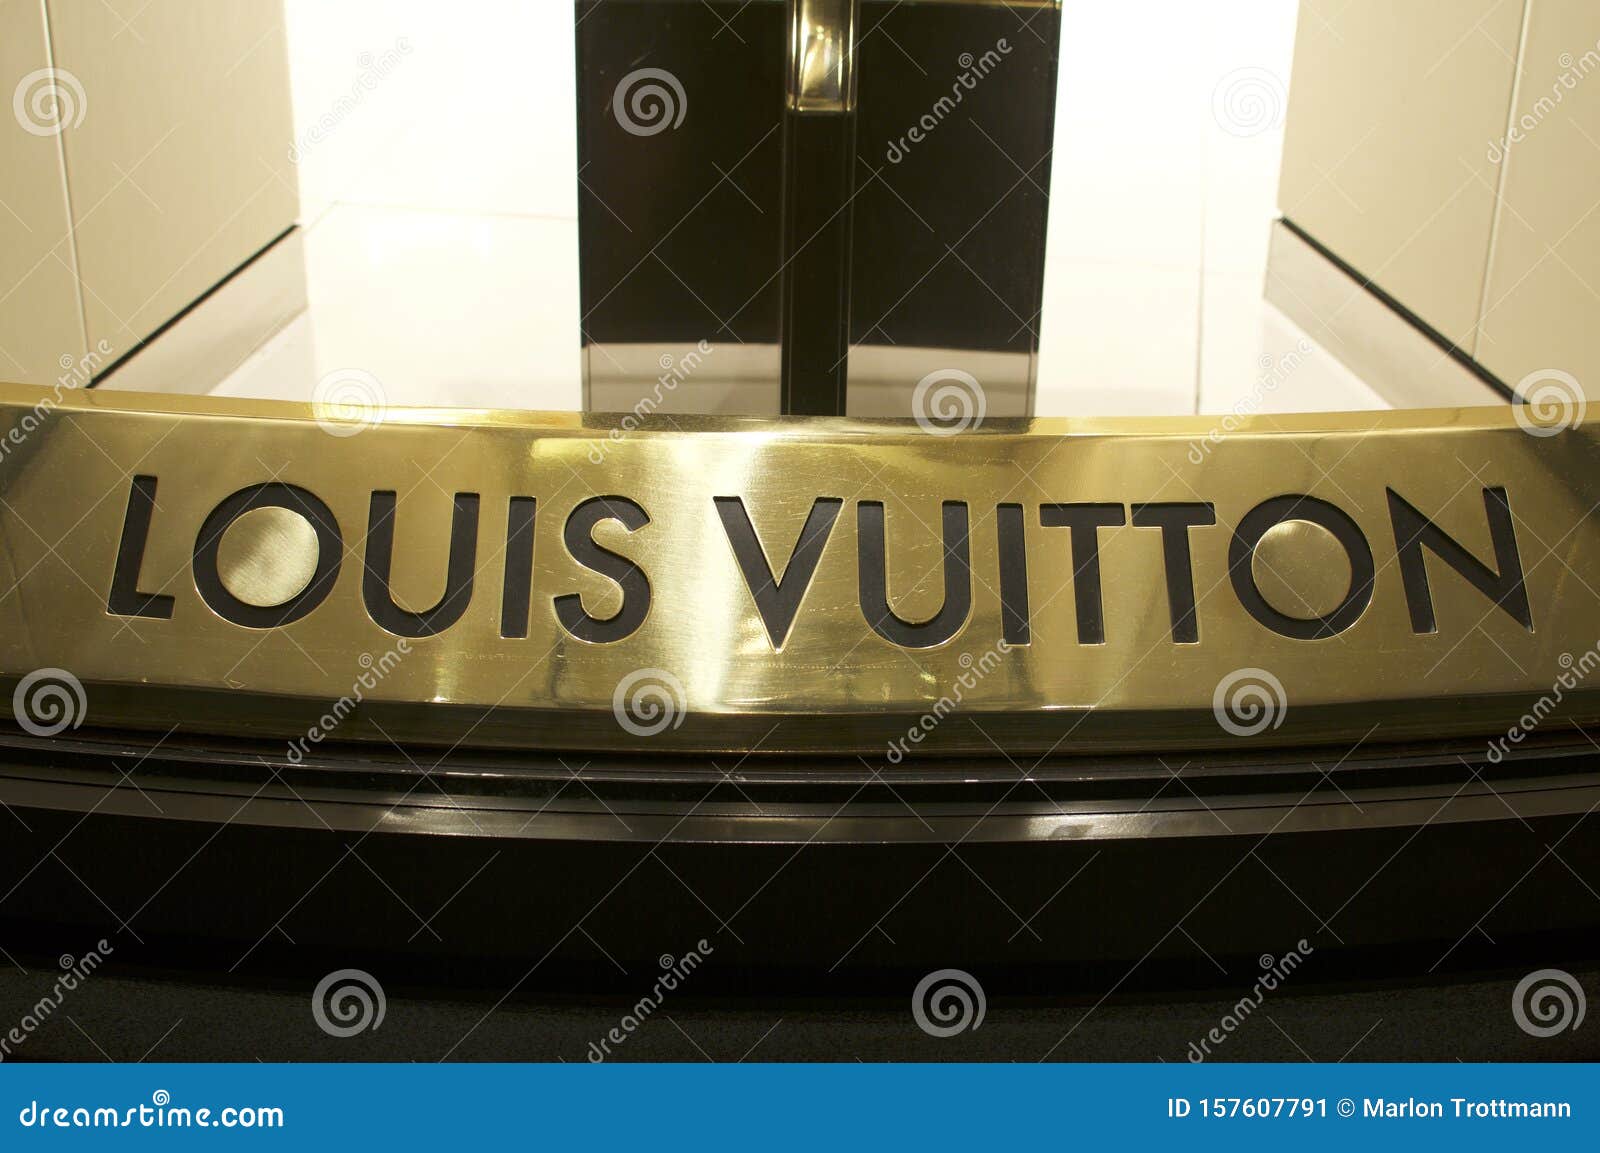 Vuitton Lugano Switzerland | SEMA Data Co-op